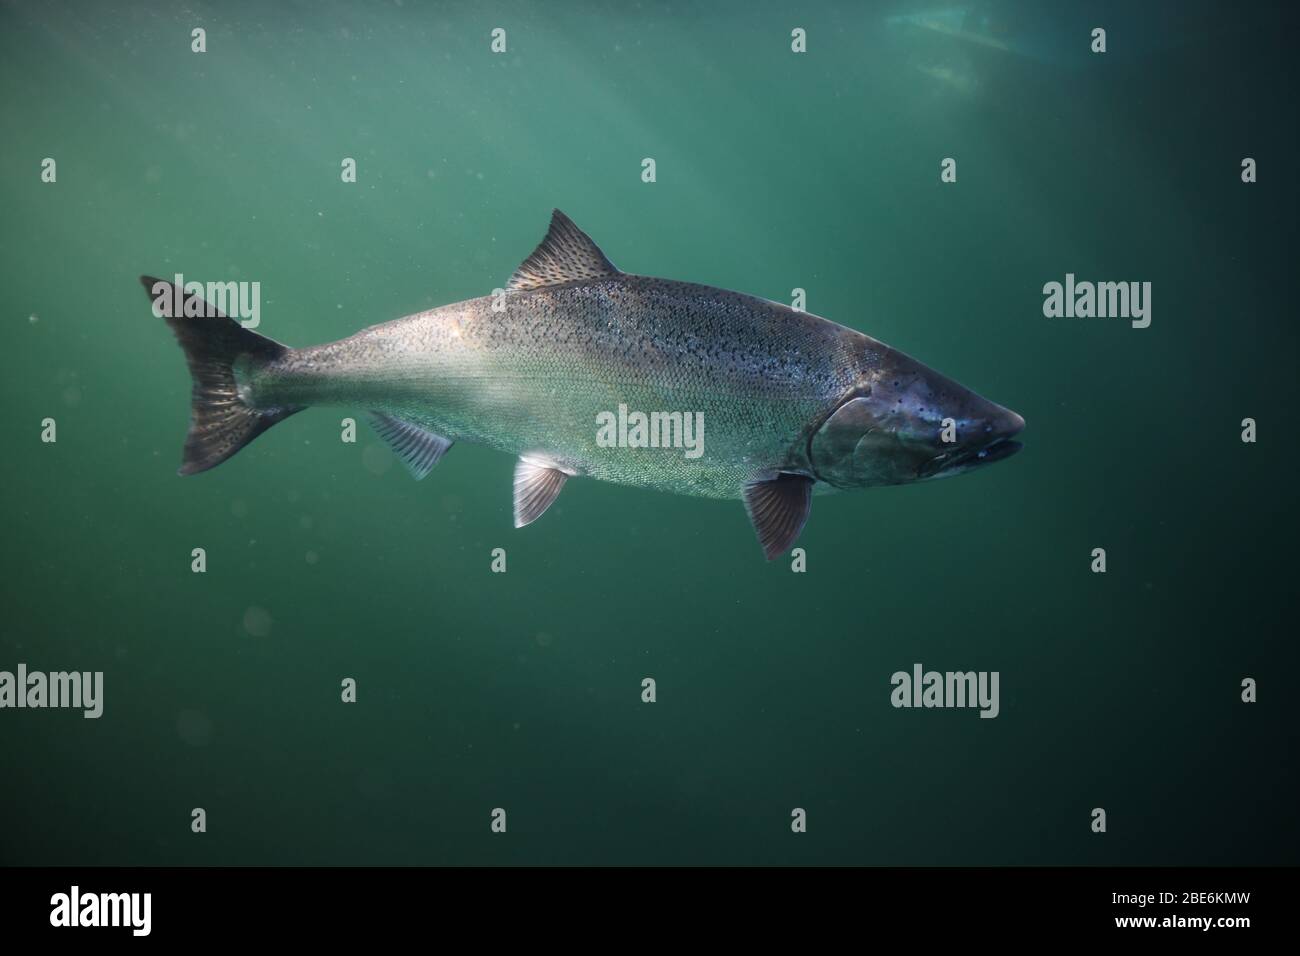 Salmone Chinook o salmone King, Oncorhynchus tshawytscha, nuoto in mare aperto o lago. Foto Stock